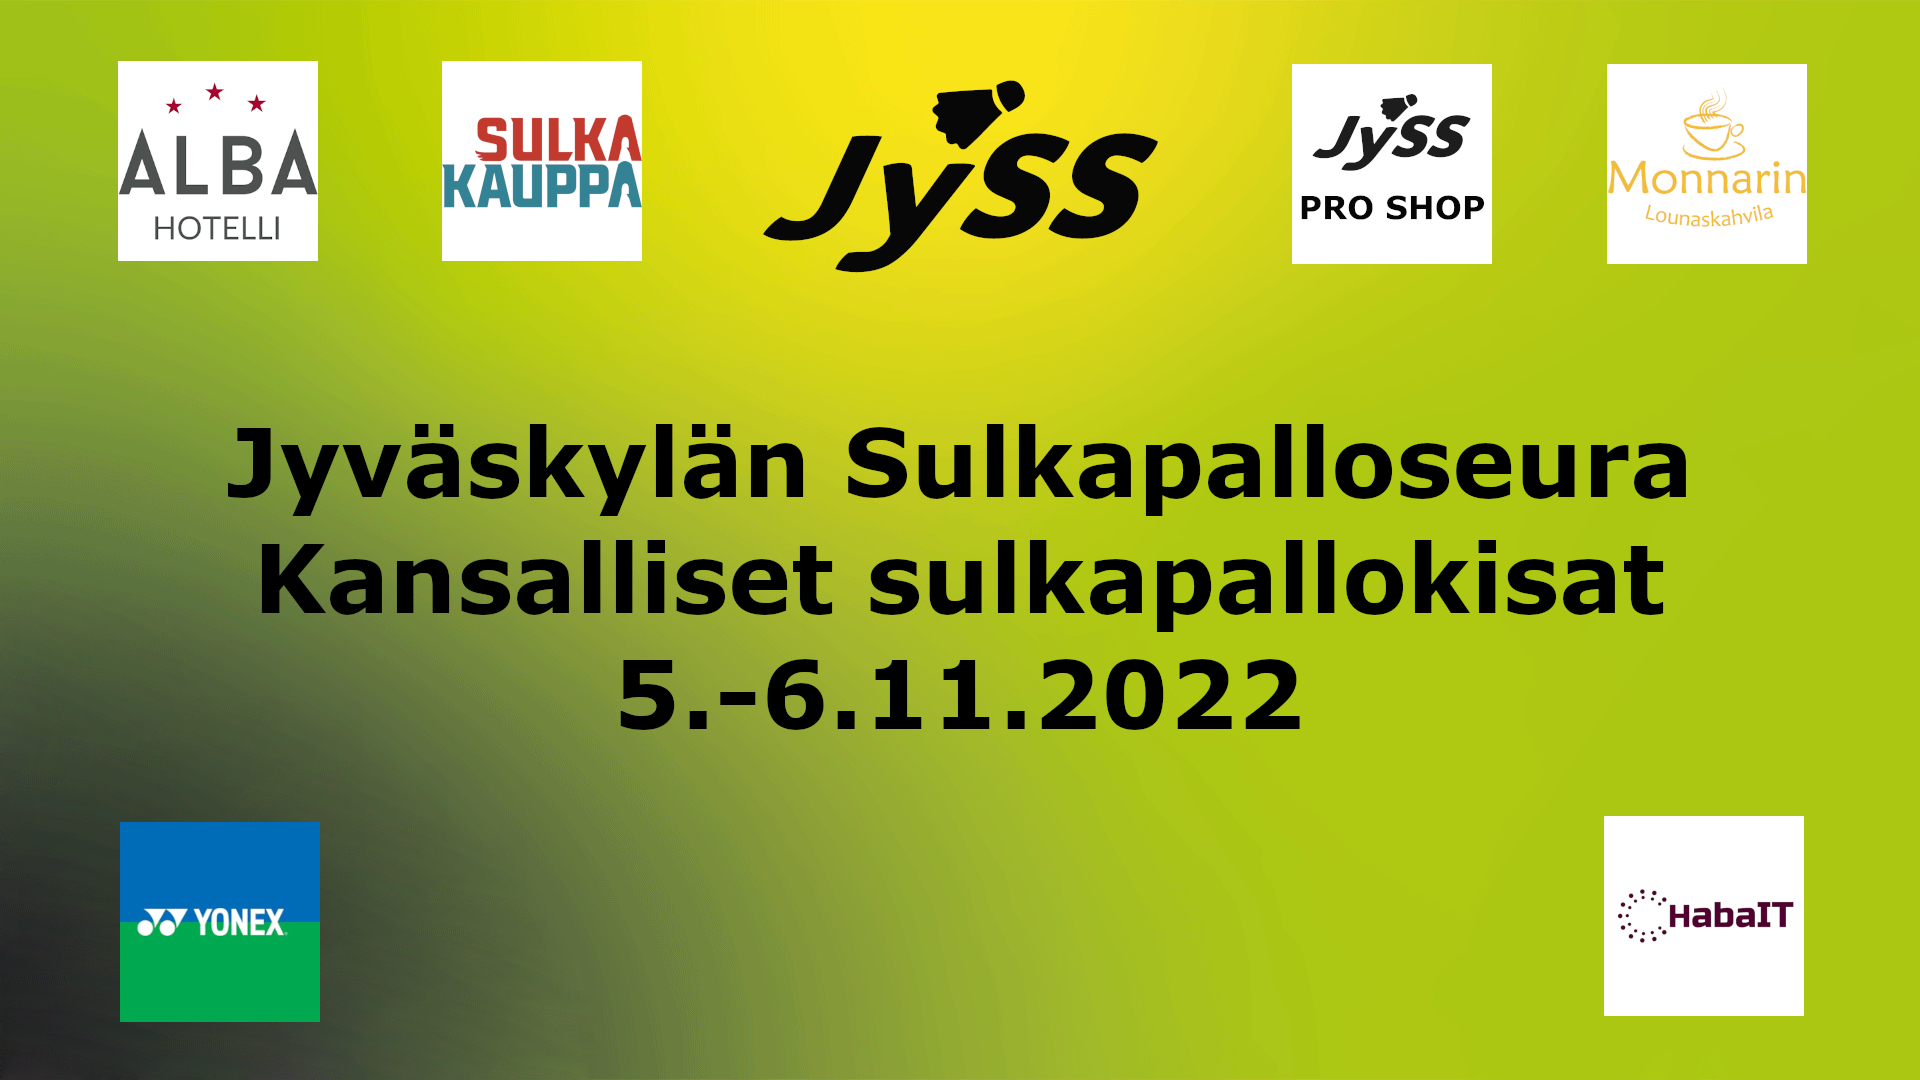 JYSS_livestream_kansalliset_5.-6.11.2022.jpg